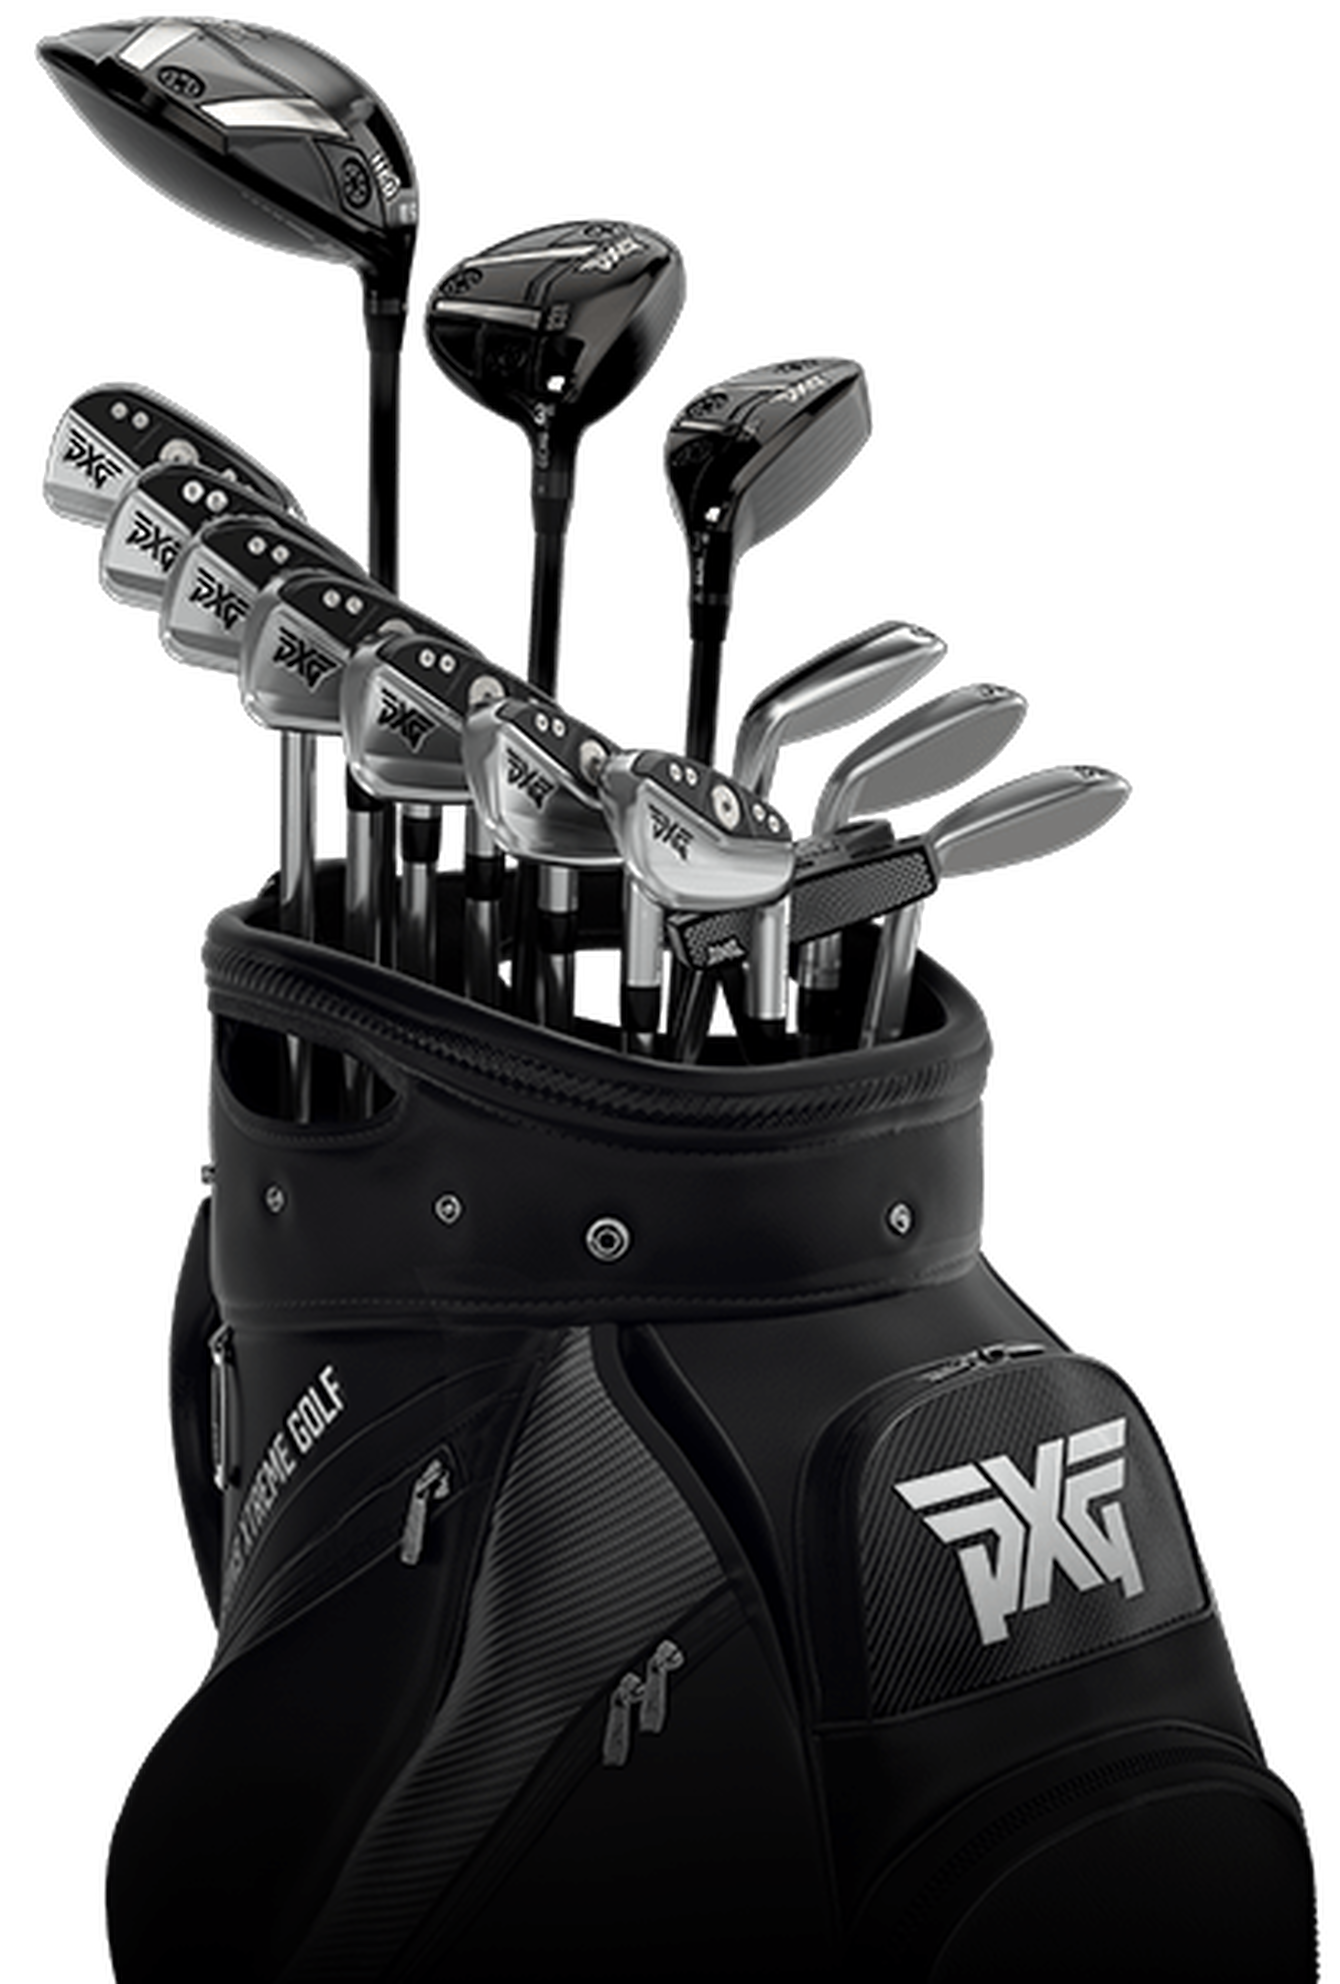 Full Bag of PXG Golf Clubs